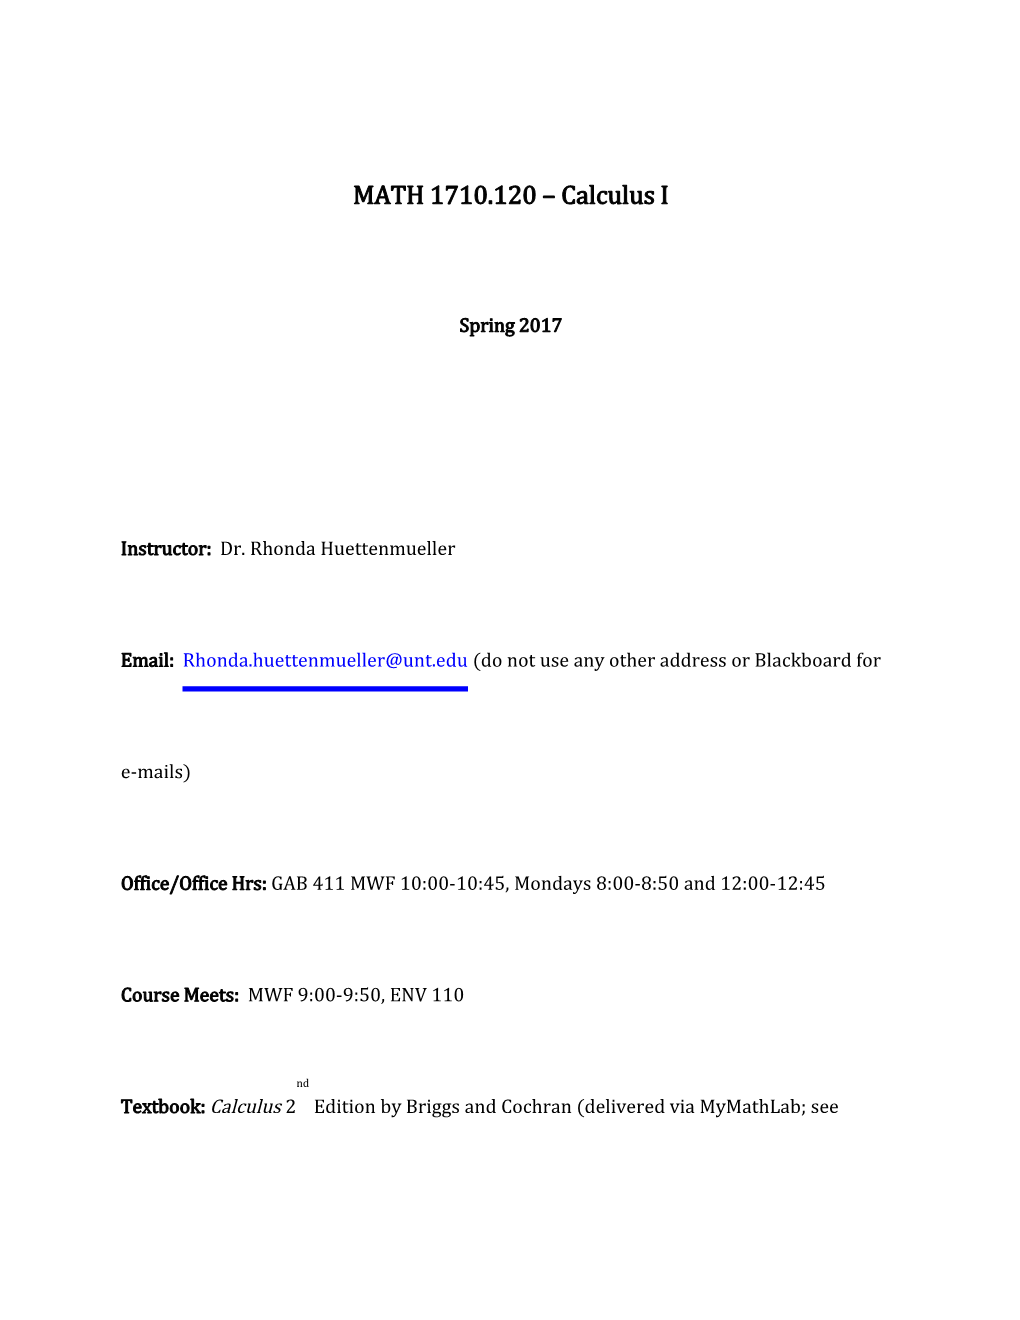 MATH 1710.120 Calculus I